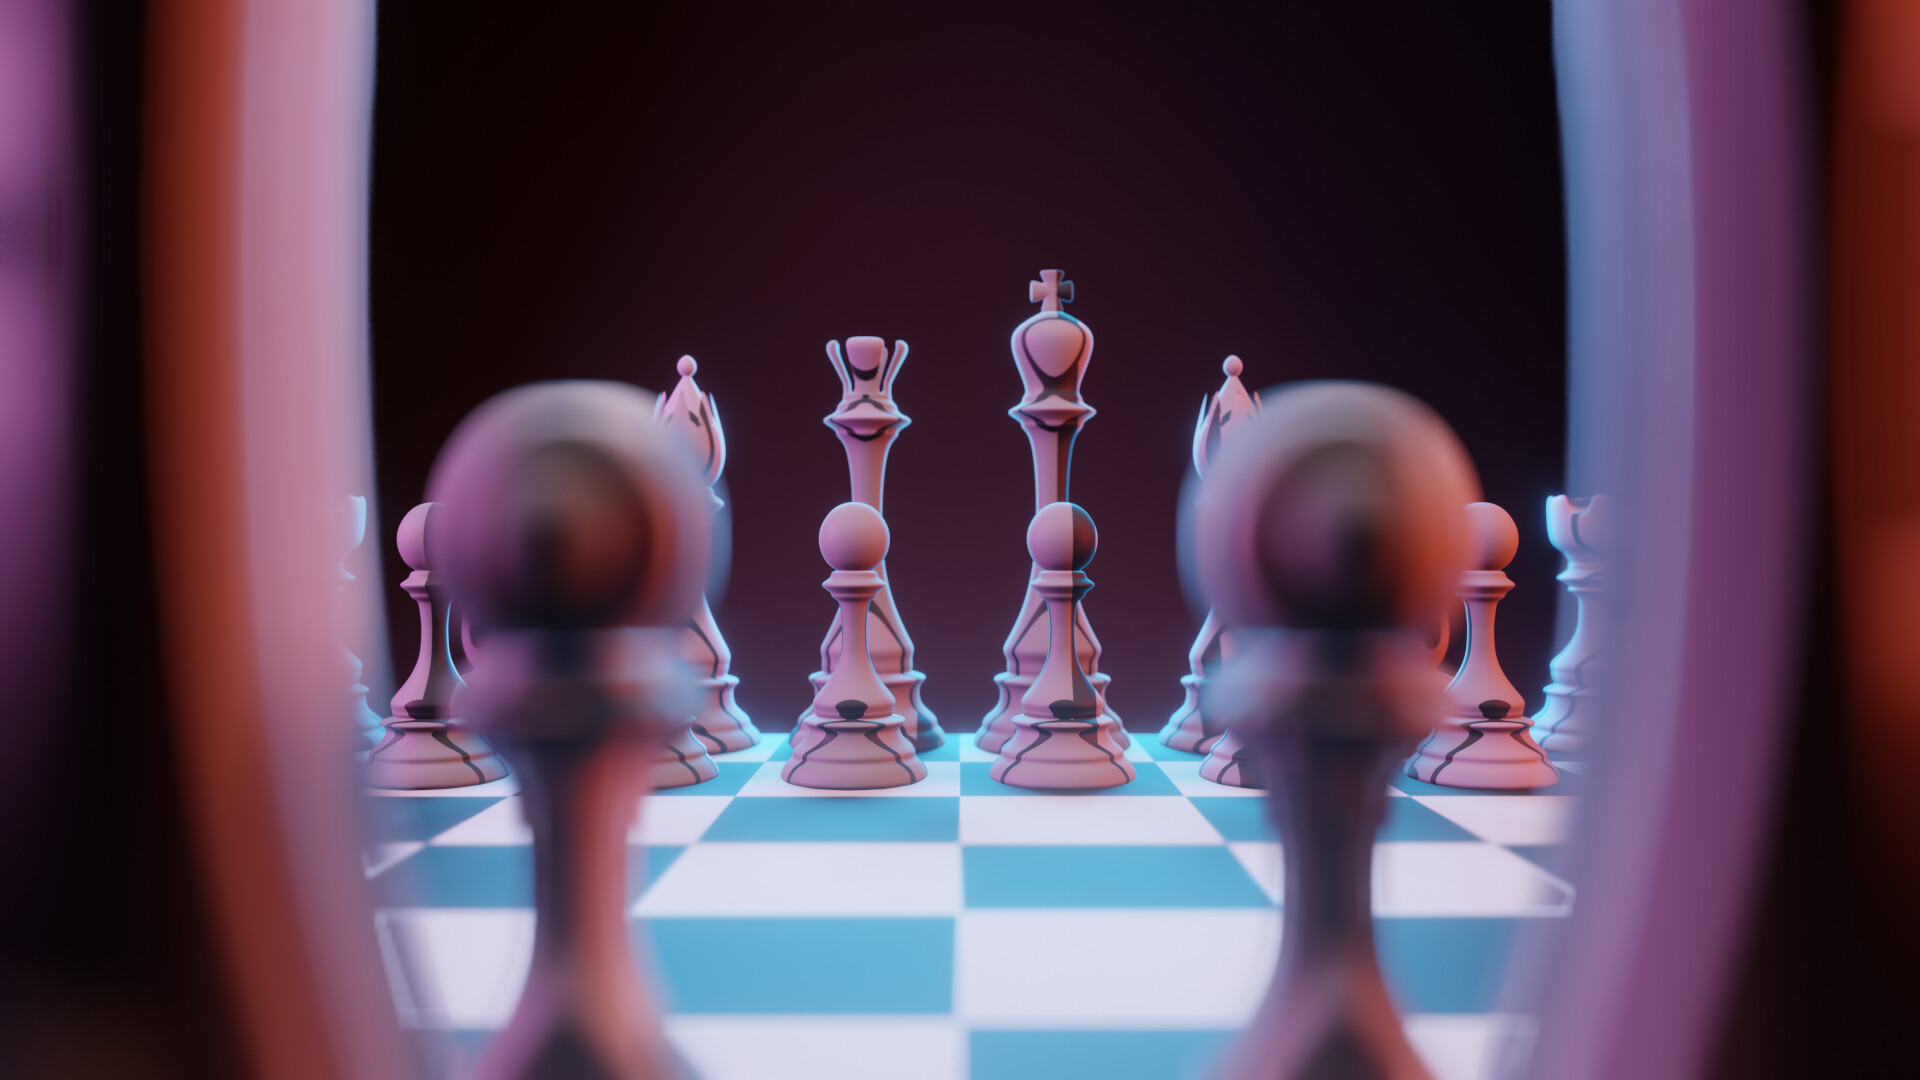 HD wallpaper: chess game set, 3D, artwork, sphere, digital art, CGI, render